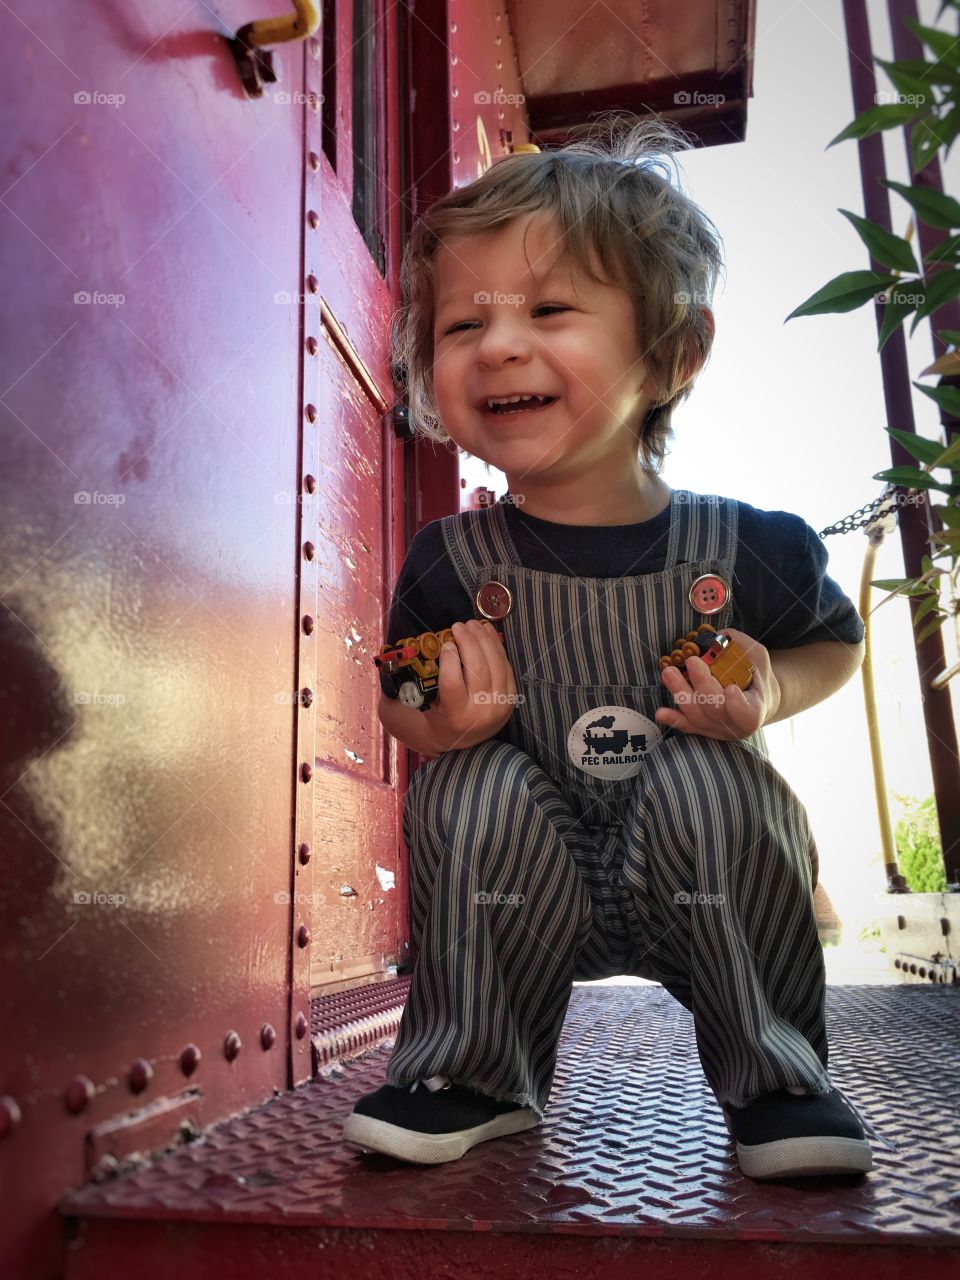 Smiling boy holding toy